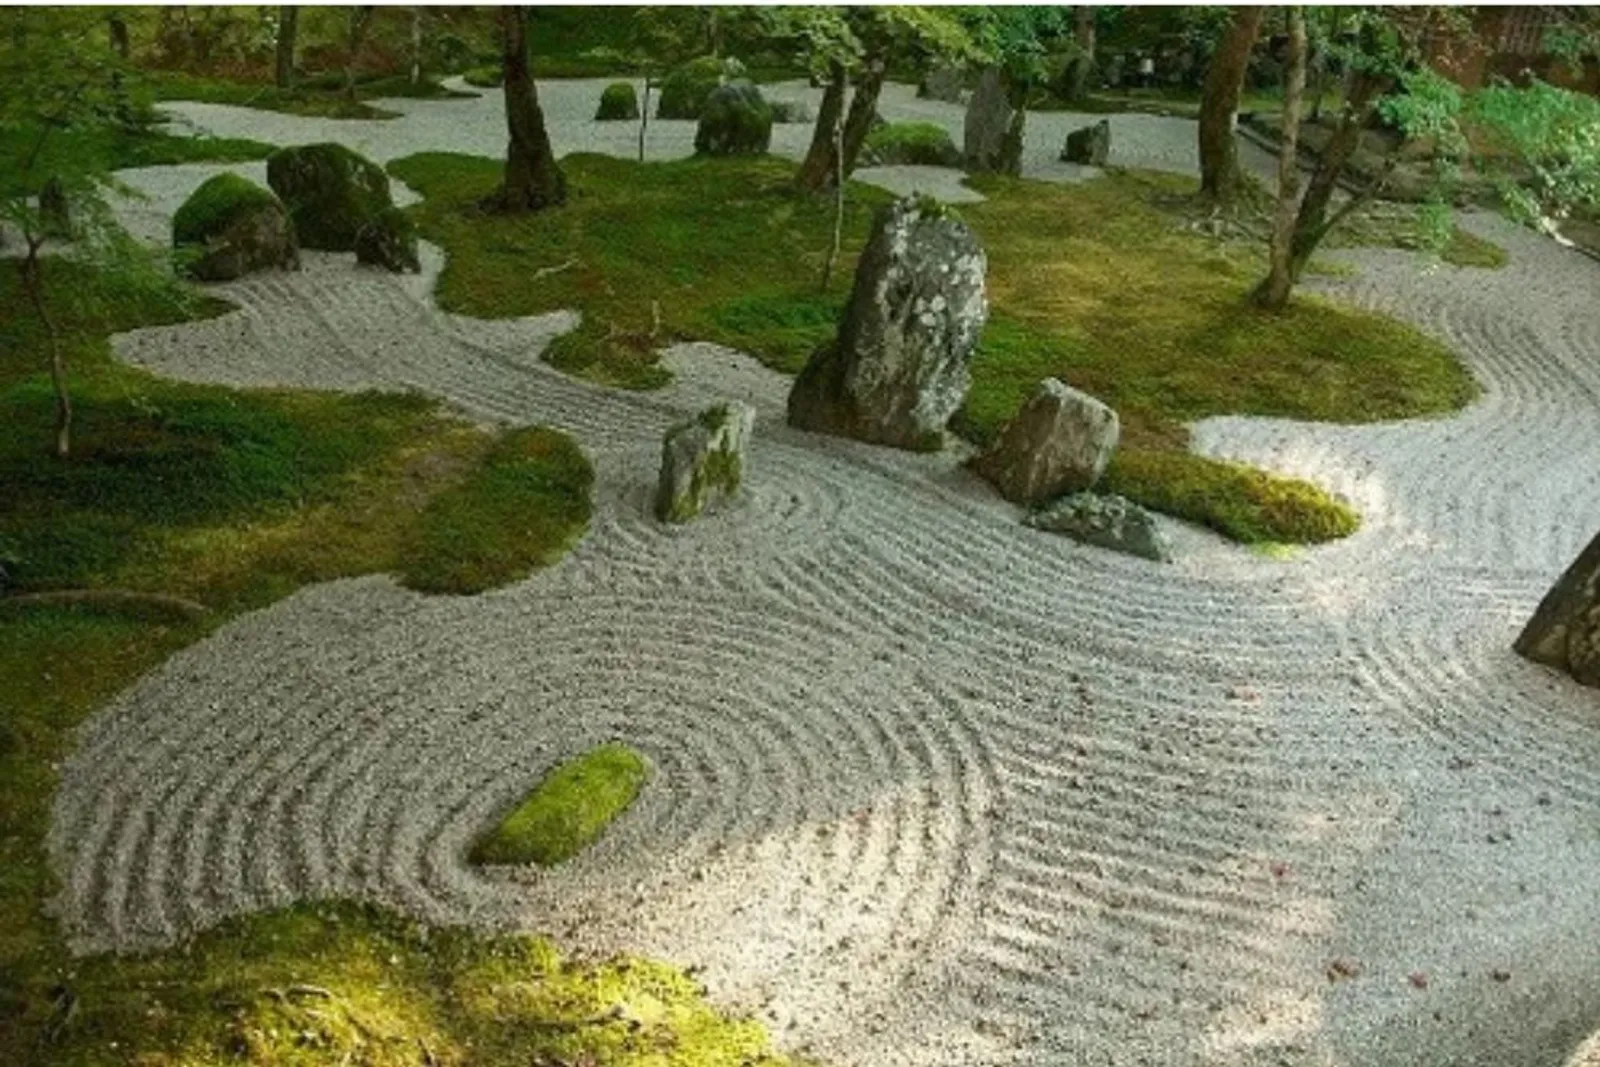 6 Inspirasi Zen Garden, Hilangkan Stress Dengan Taman Kering di Rumah